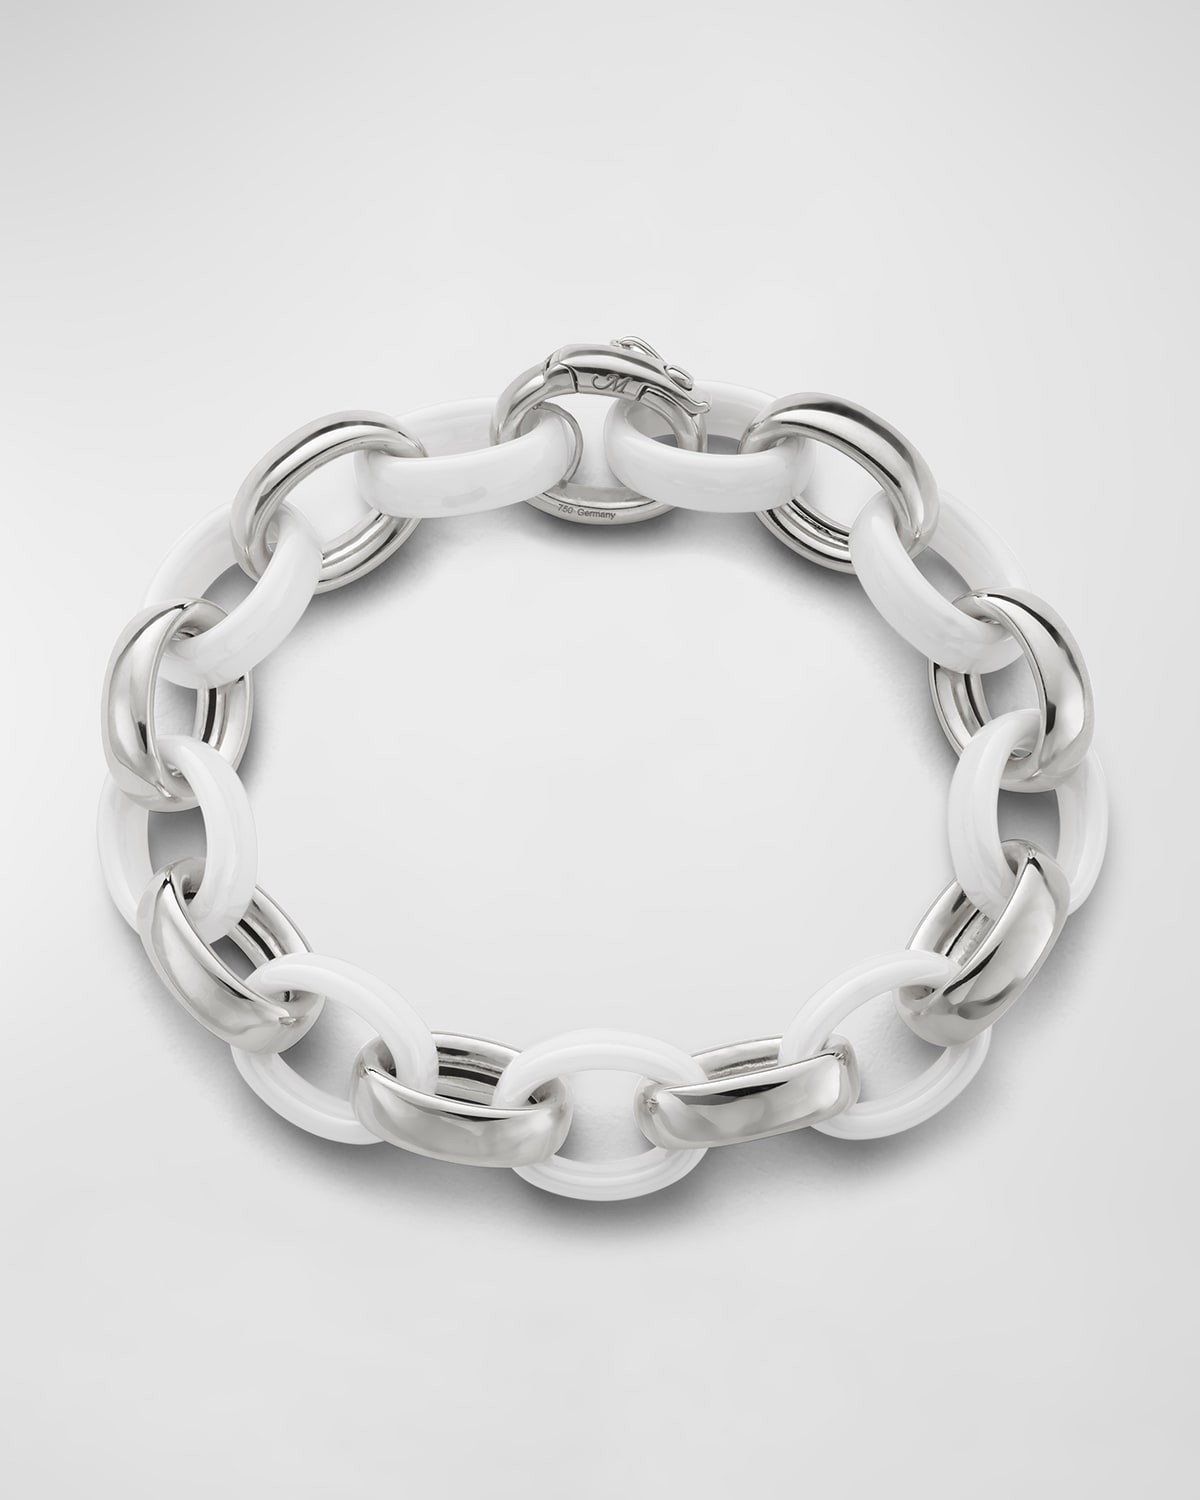 Sterling Silver Marilyn XL Ultra Bracelet with Alternating Ceramic Links, 8"L